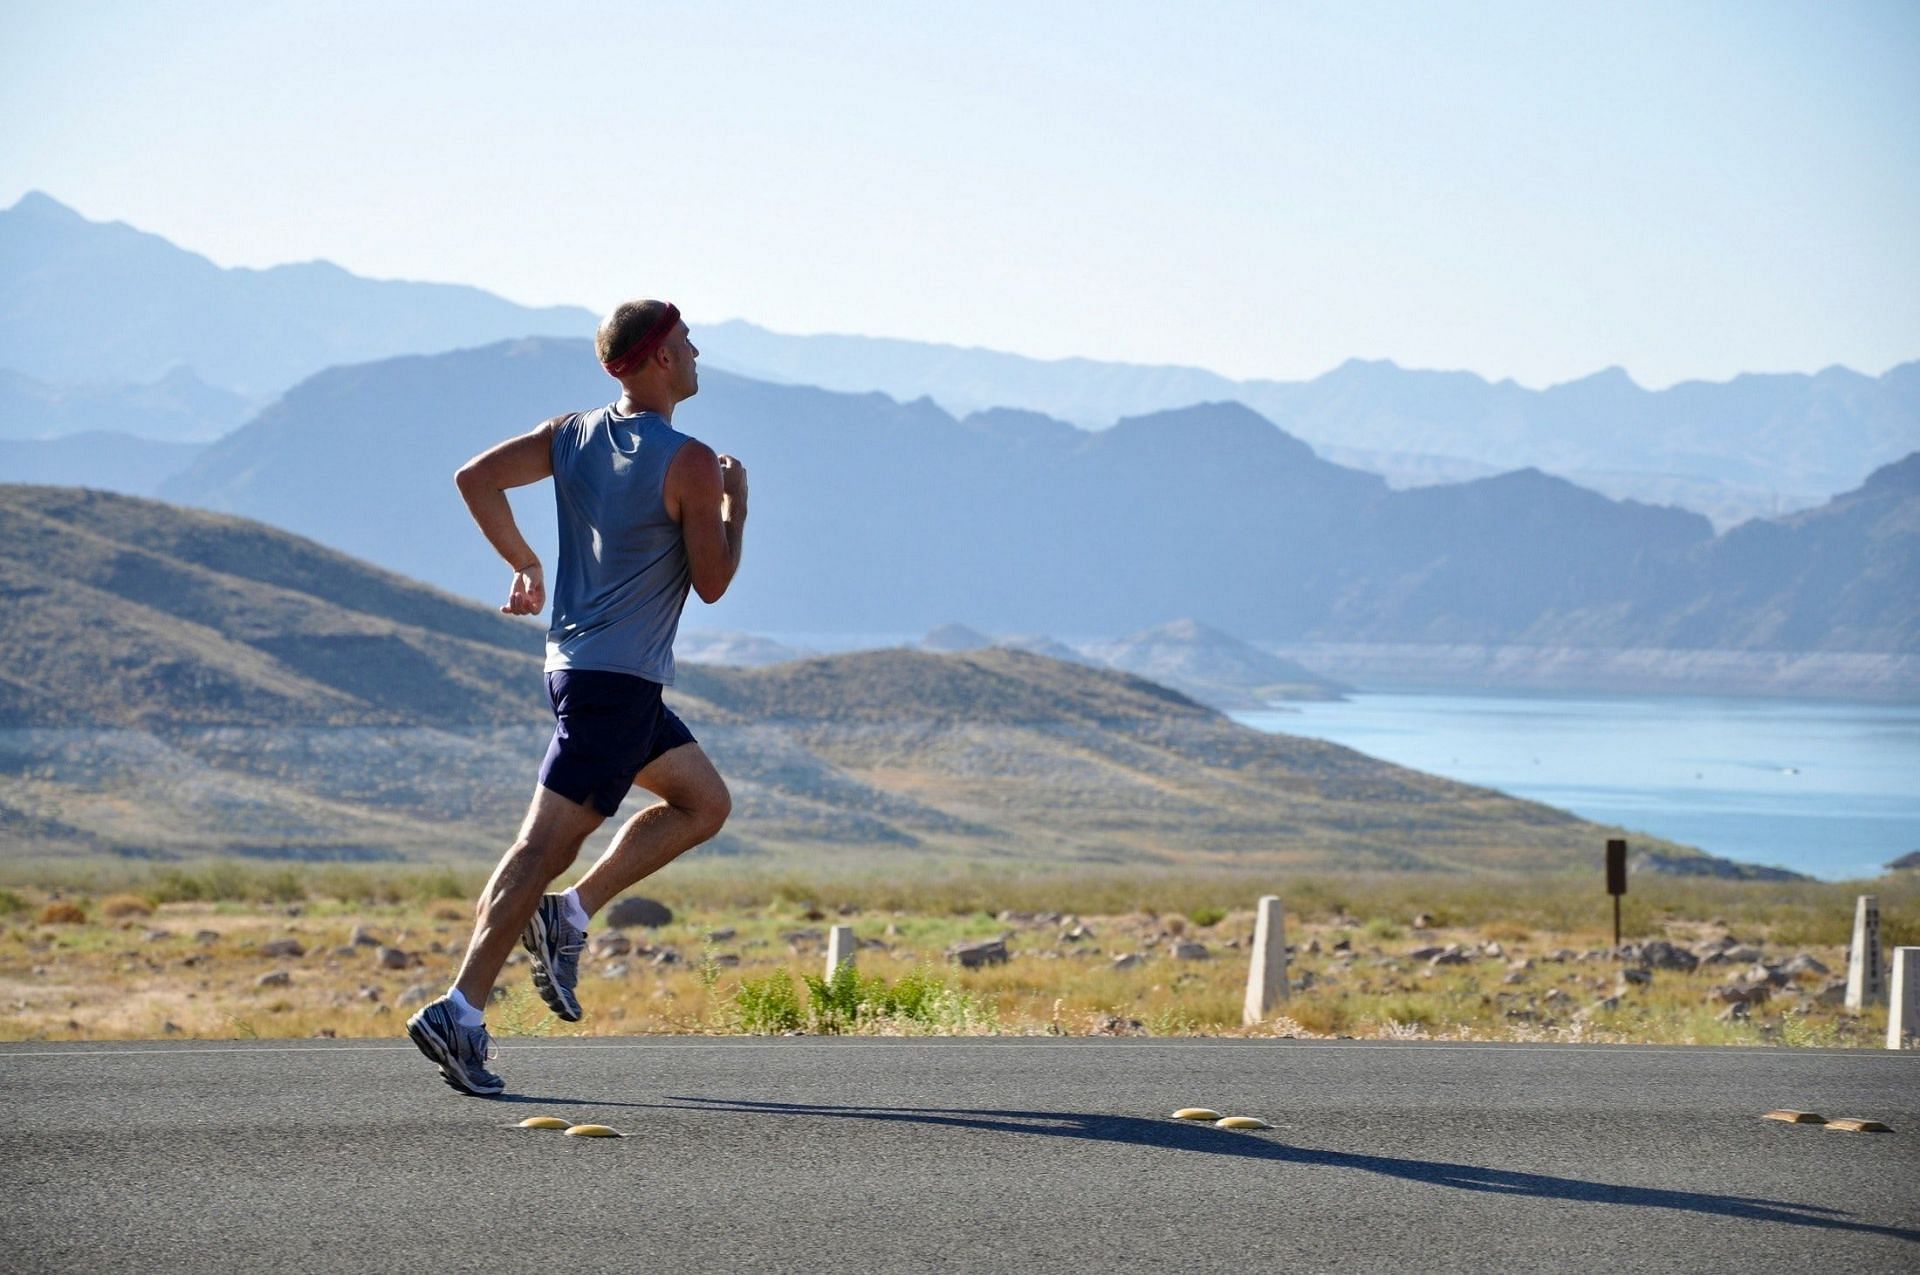 On an average, running burns 100 calories per mile (Image via Pexels @Pixabay)